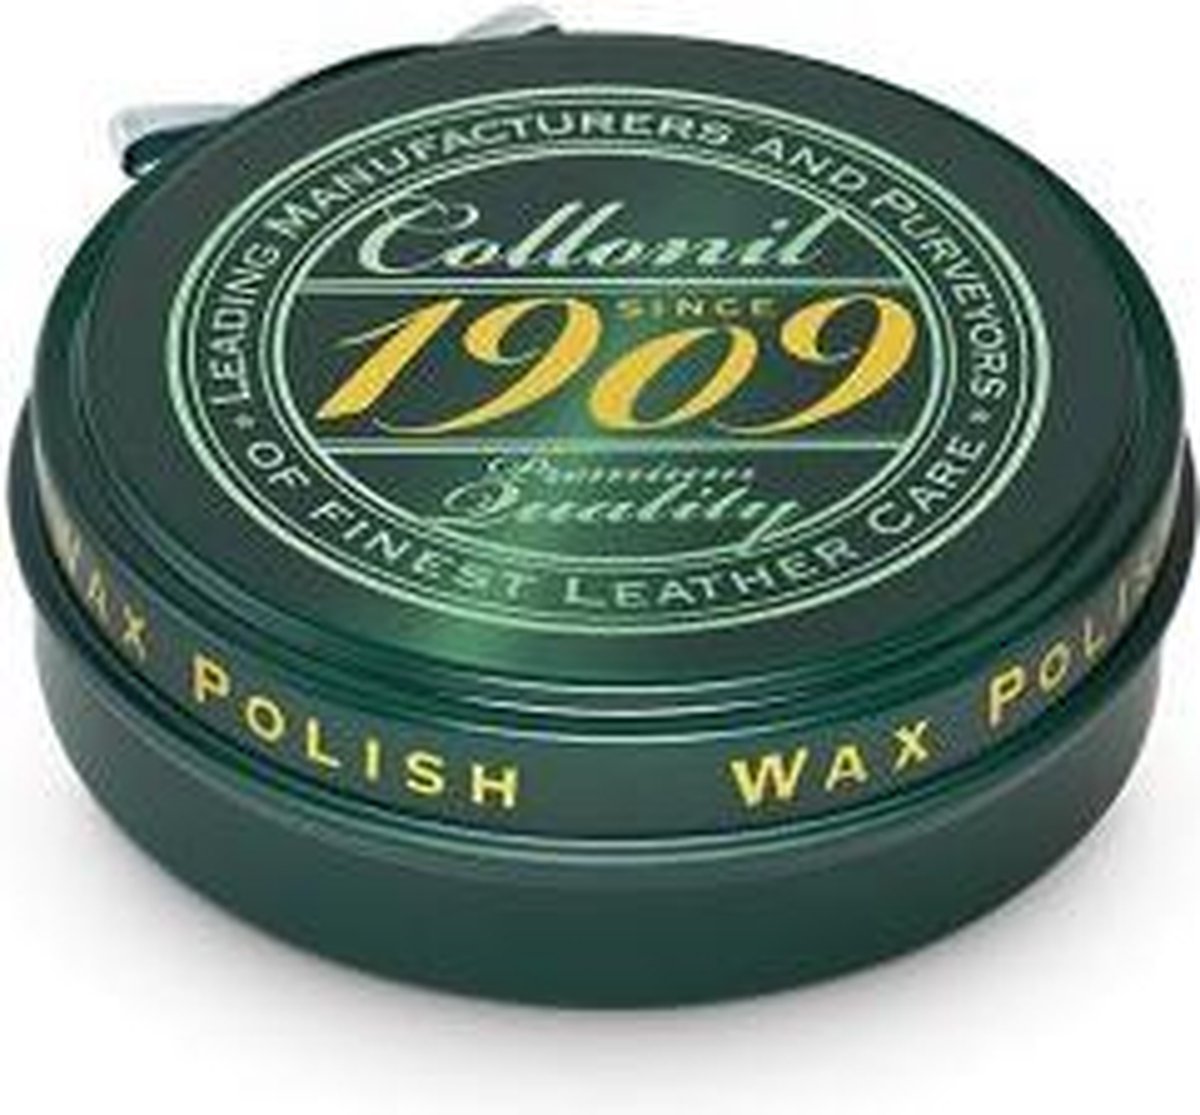 Wax Hoogglans Polish Tan kleur voor glad leer - Collonil 1909 professionele shoewax